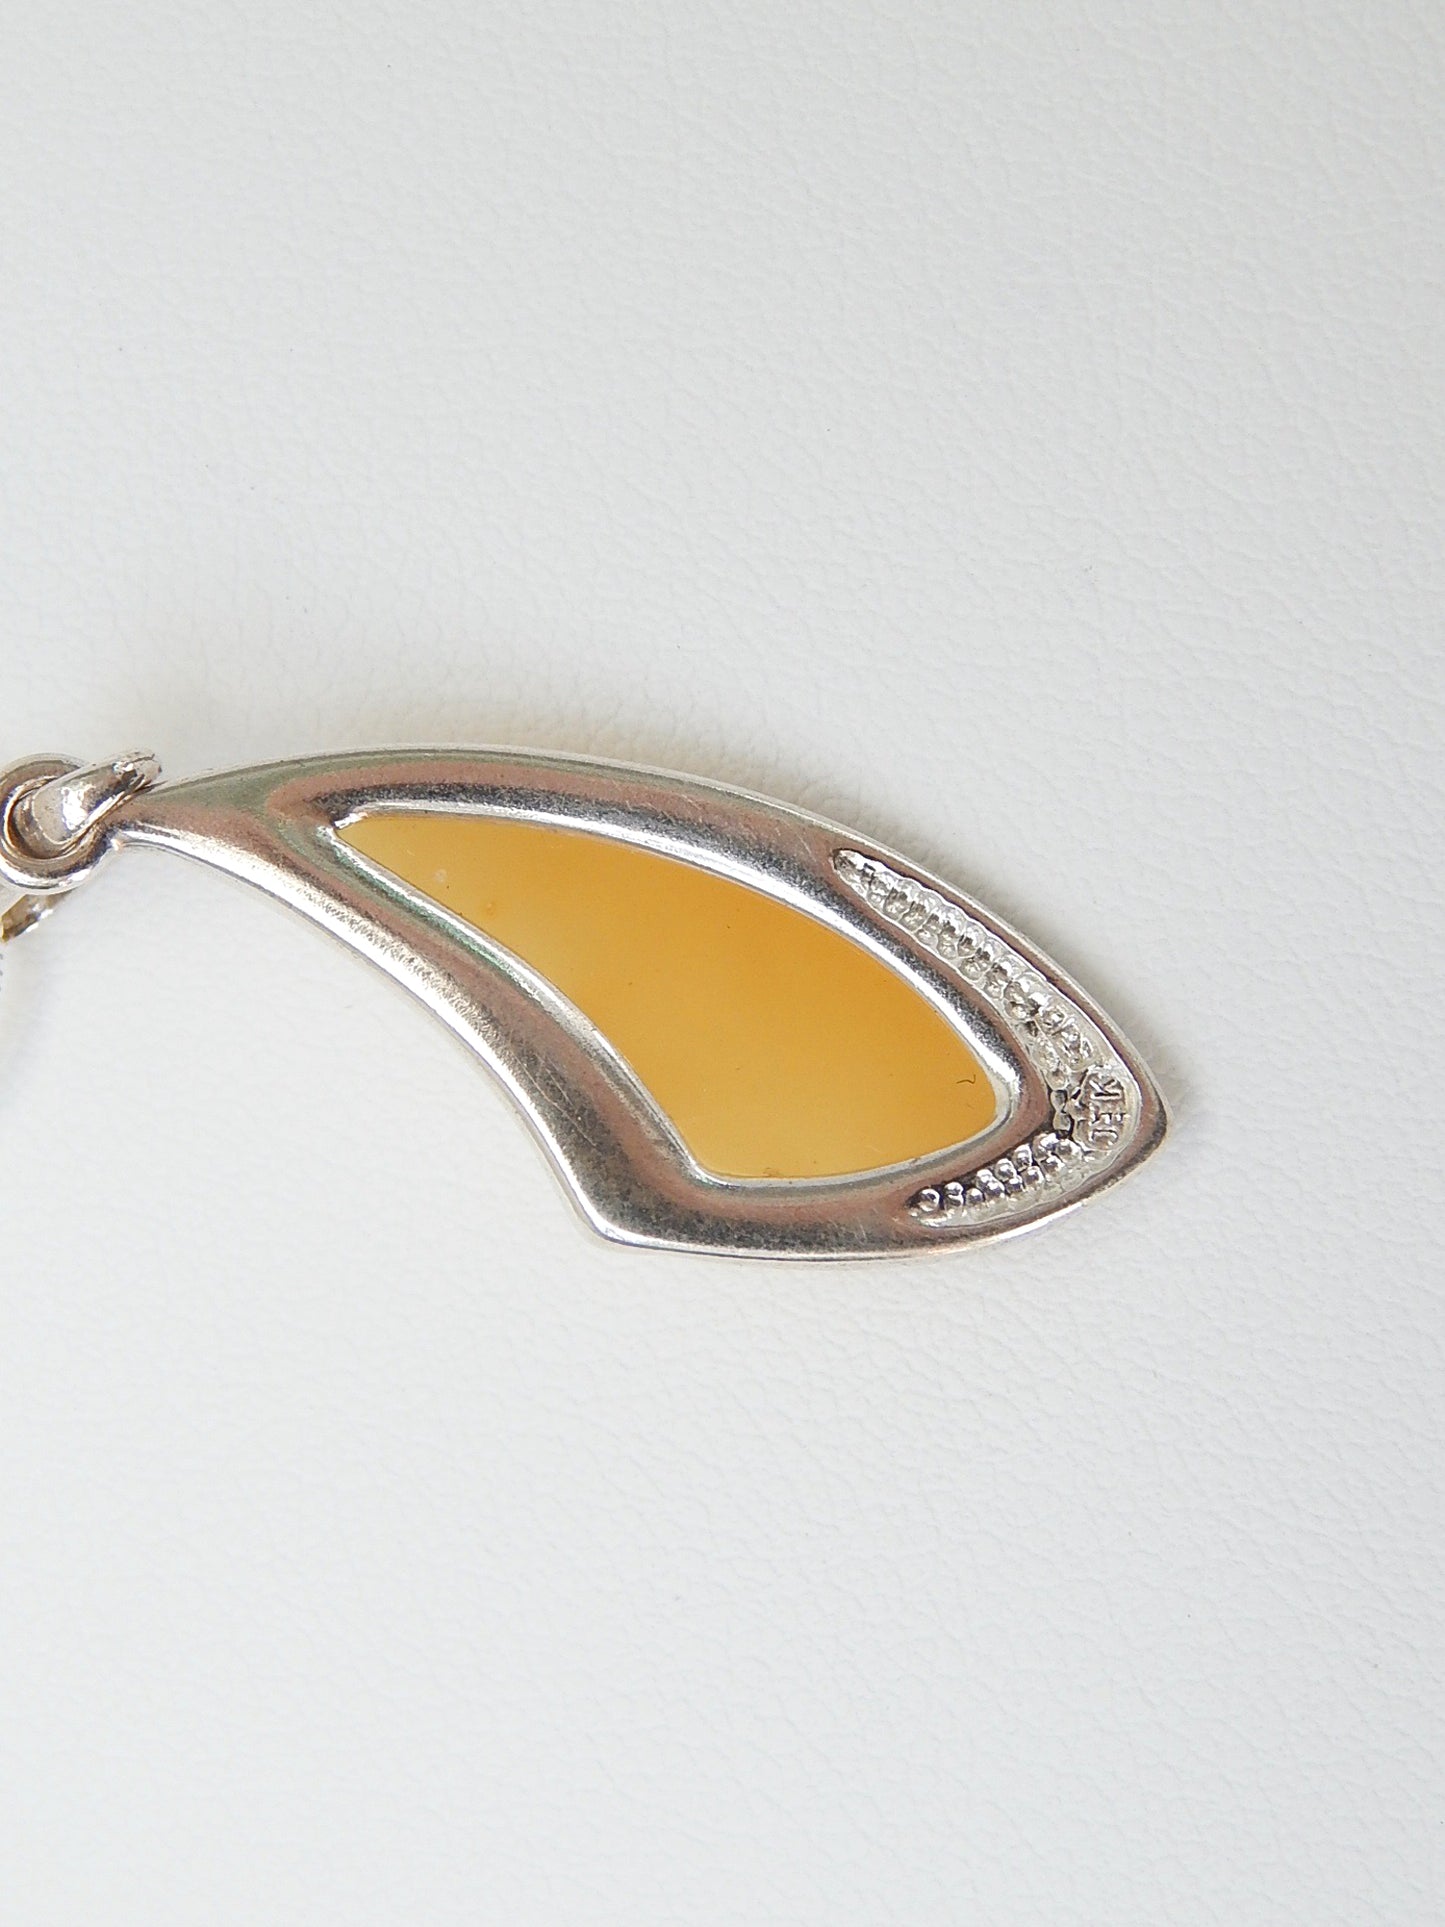 Natural Baltic Lemon Amber Modern Geometric Pendant Necklace